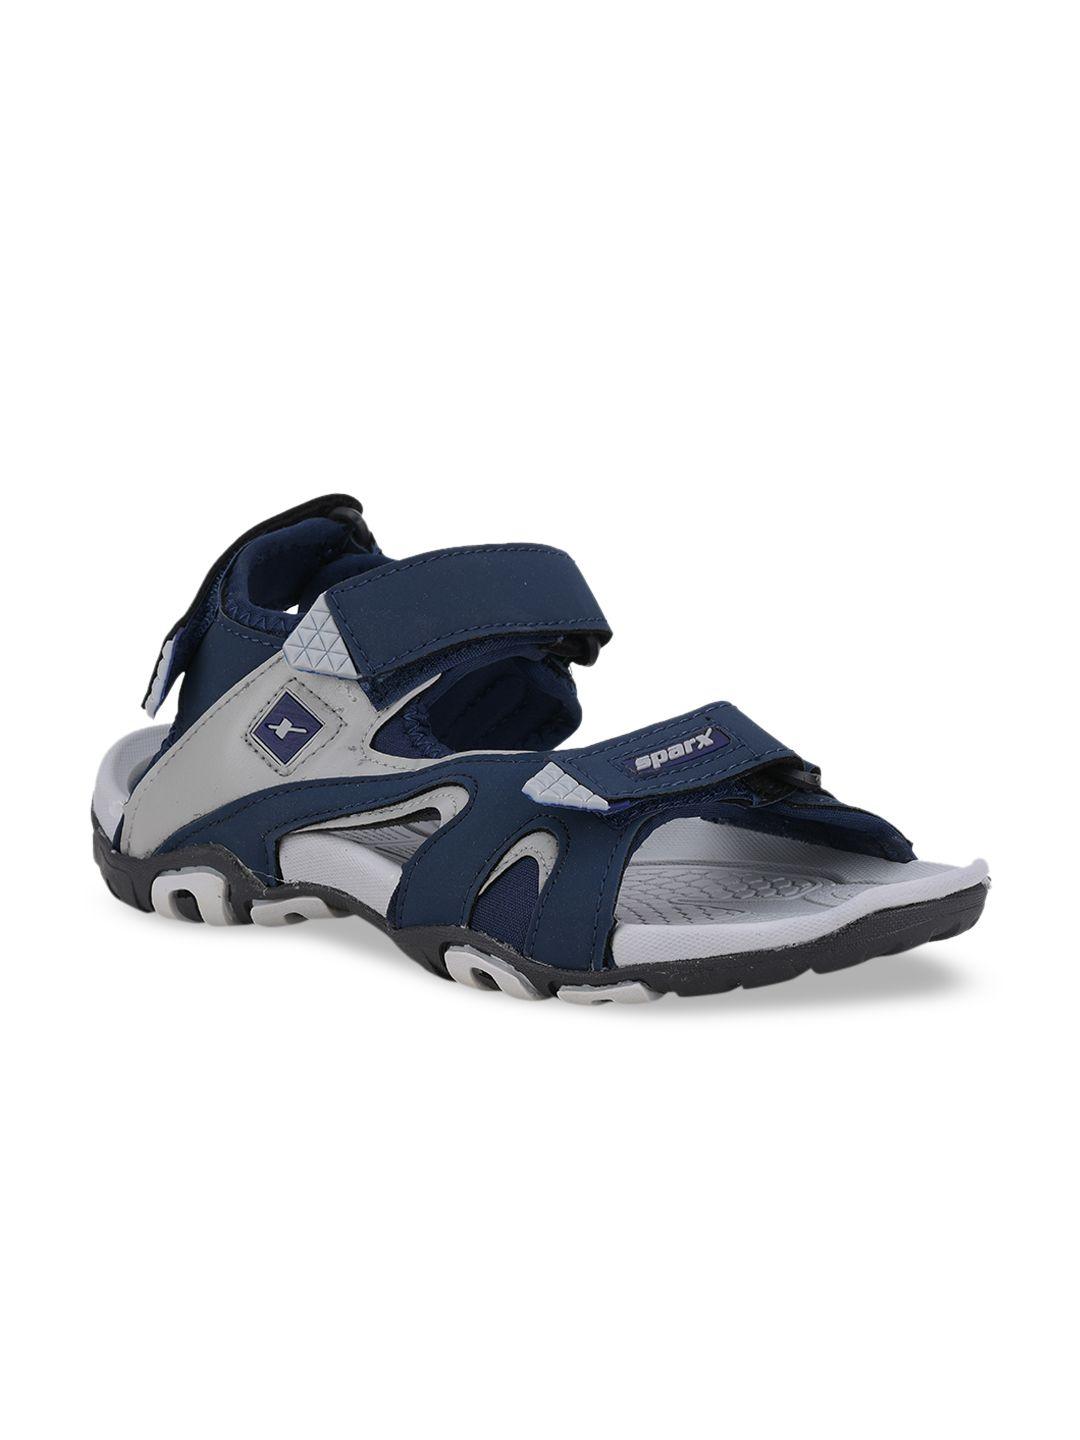 sparx-men-blue-&-grey-comfort-sandals